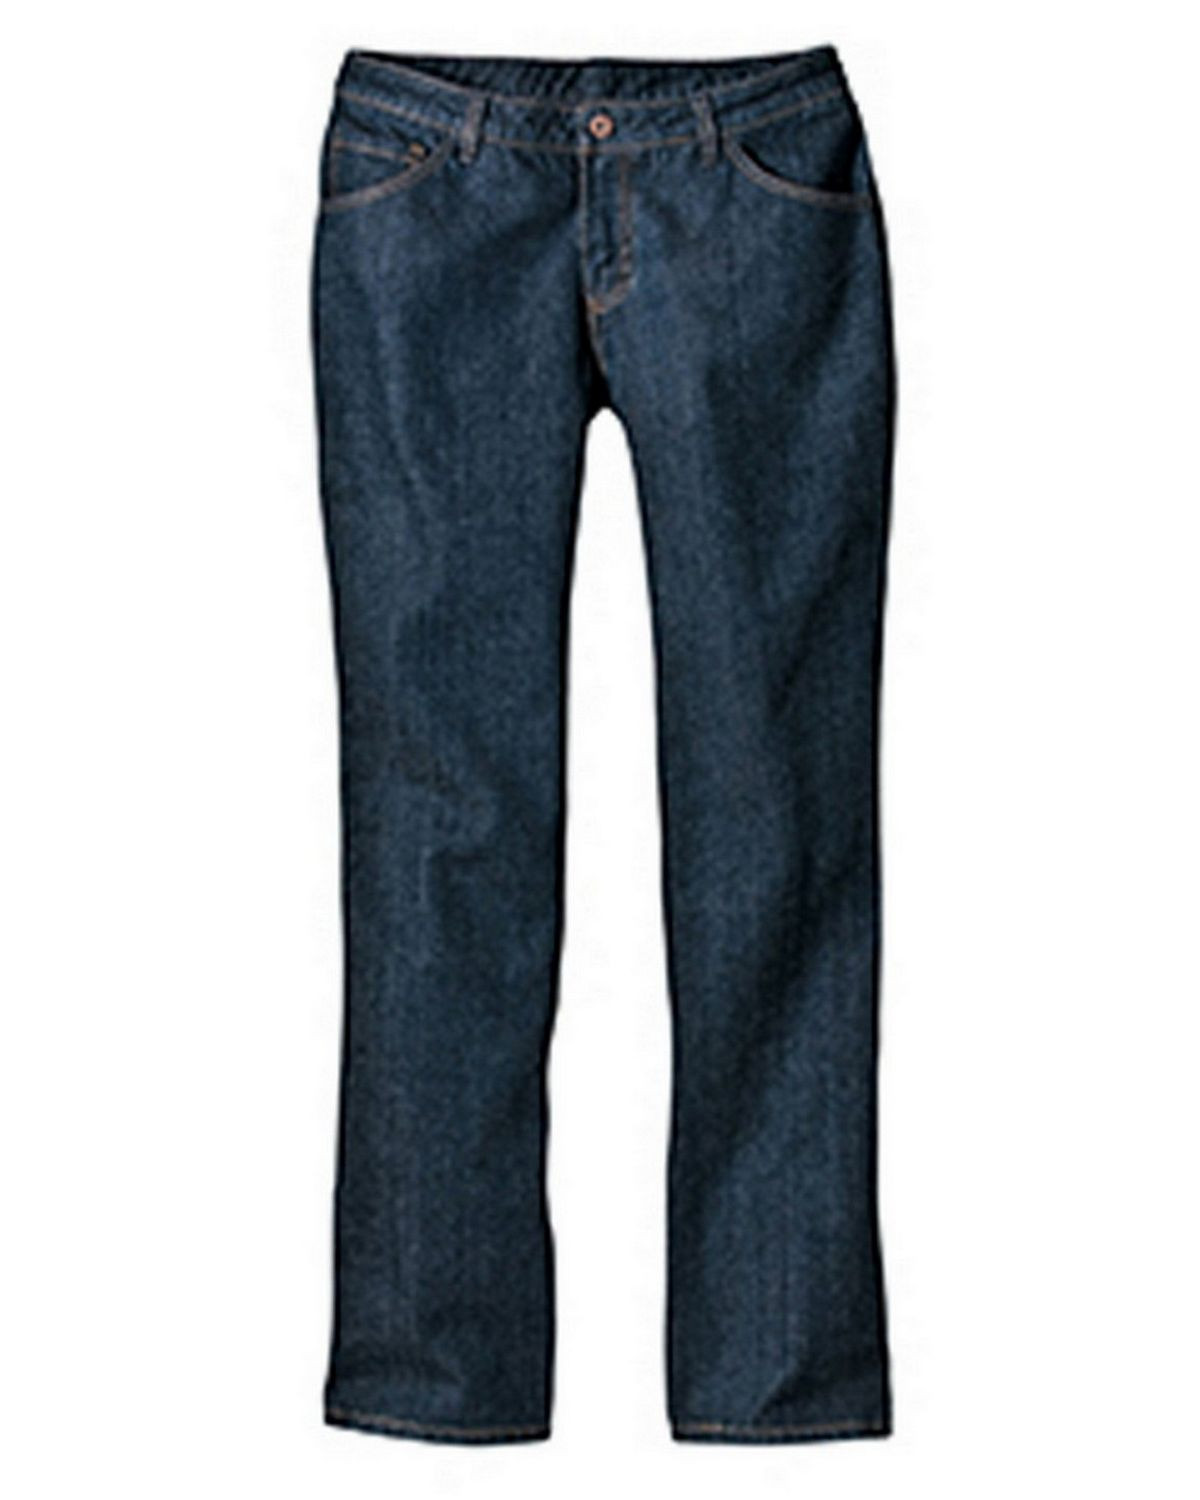 Dickies FD231 Women's Denim Five-Pocket Jean - Indigo Blue - 34T x 10 #denim